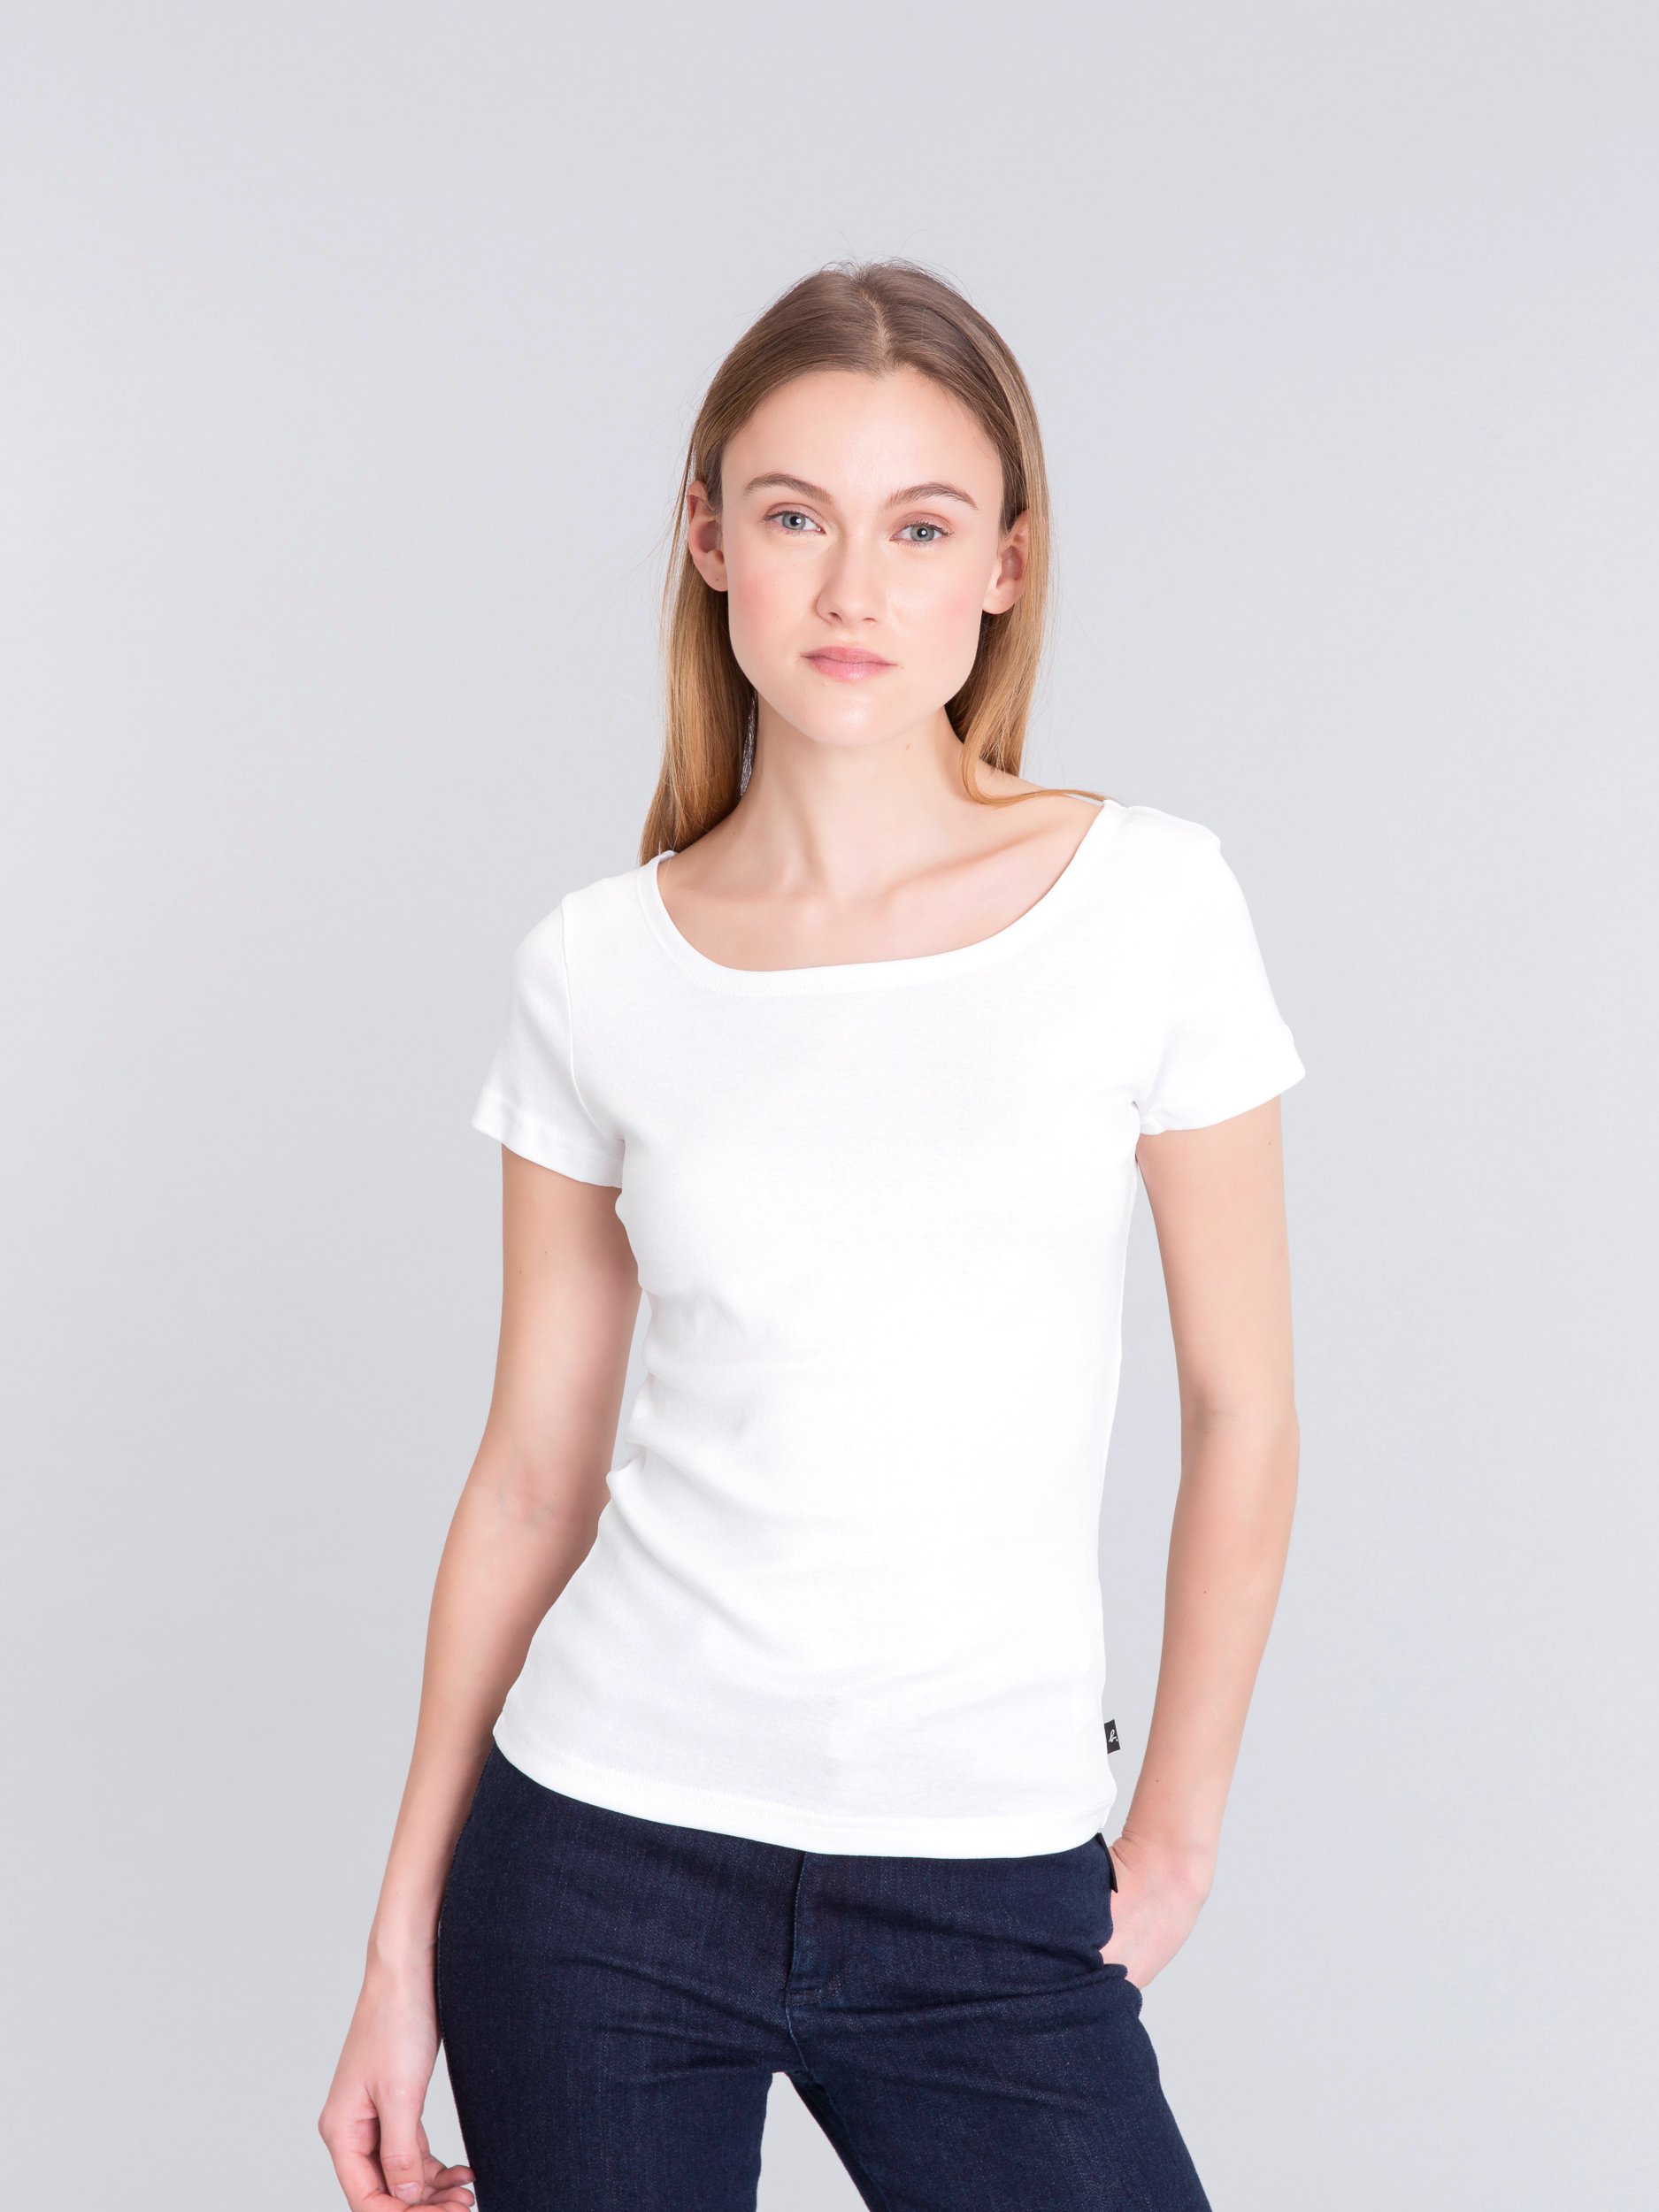 Schuine streep Monet Natuur white short sleeve Le Chic t-shirt | agnès b.